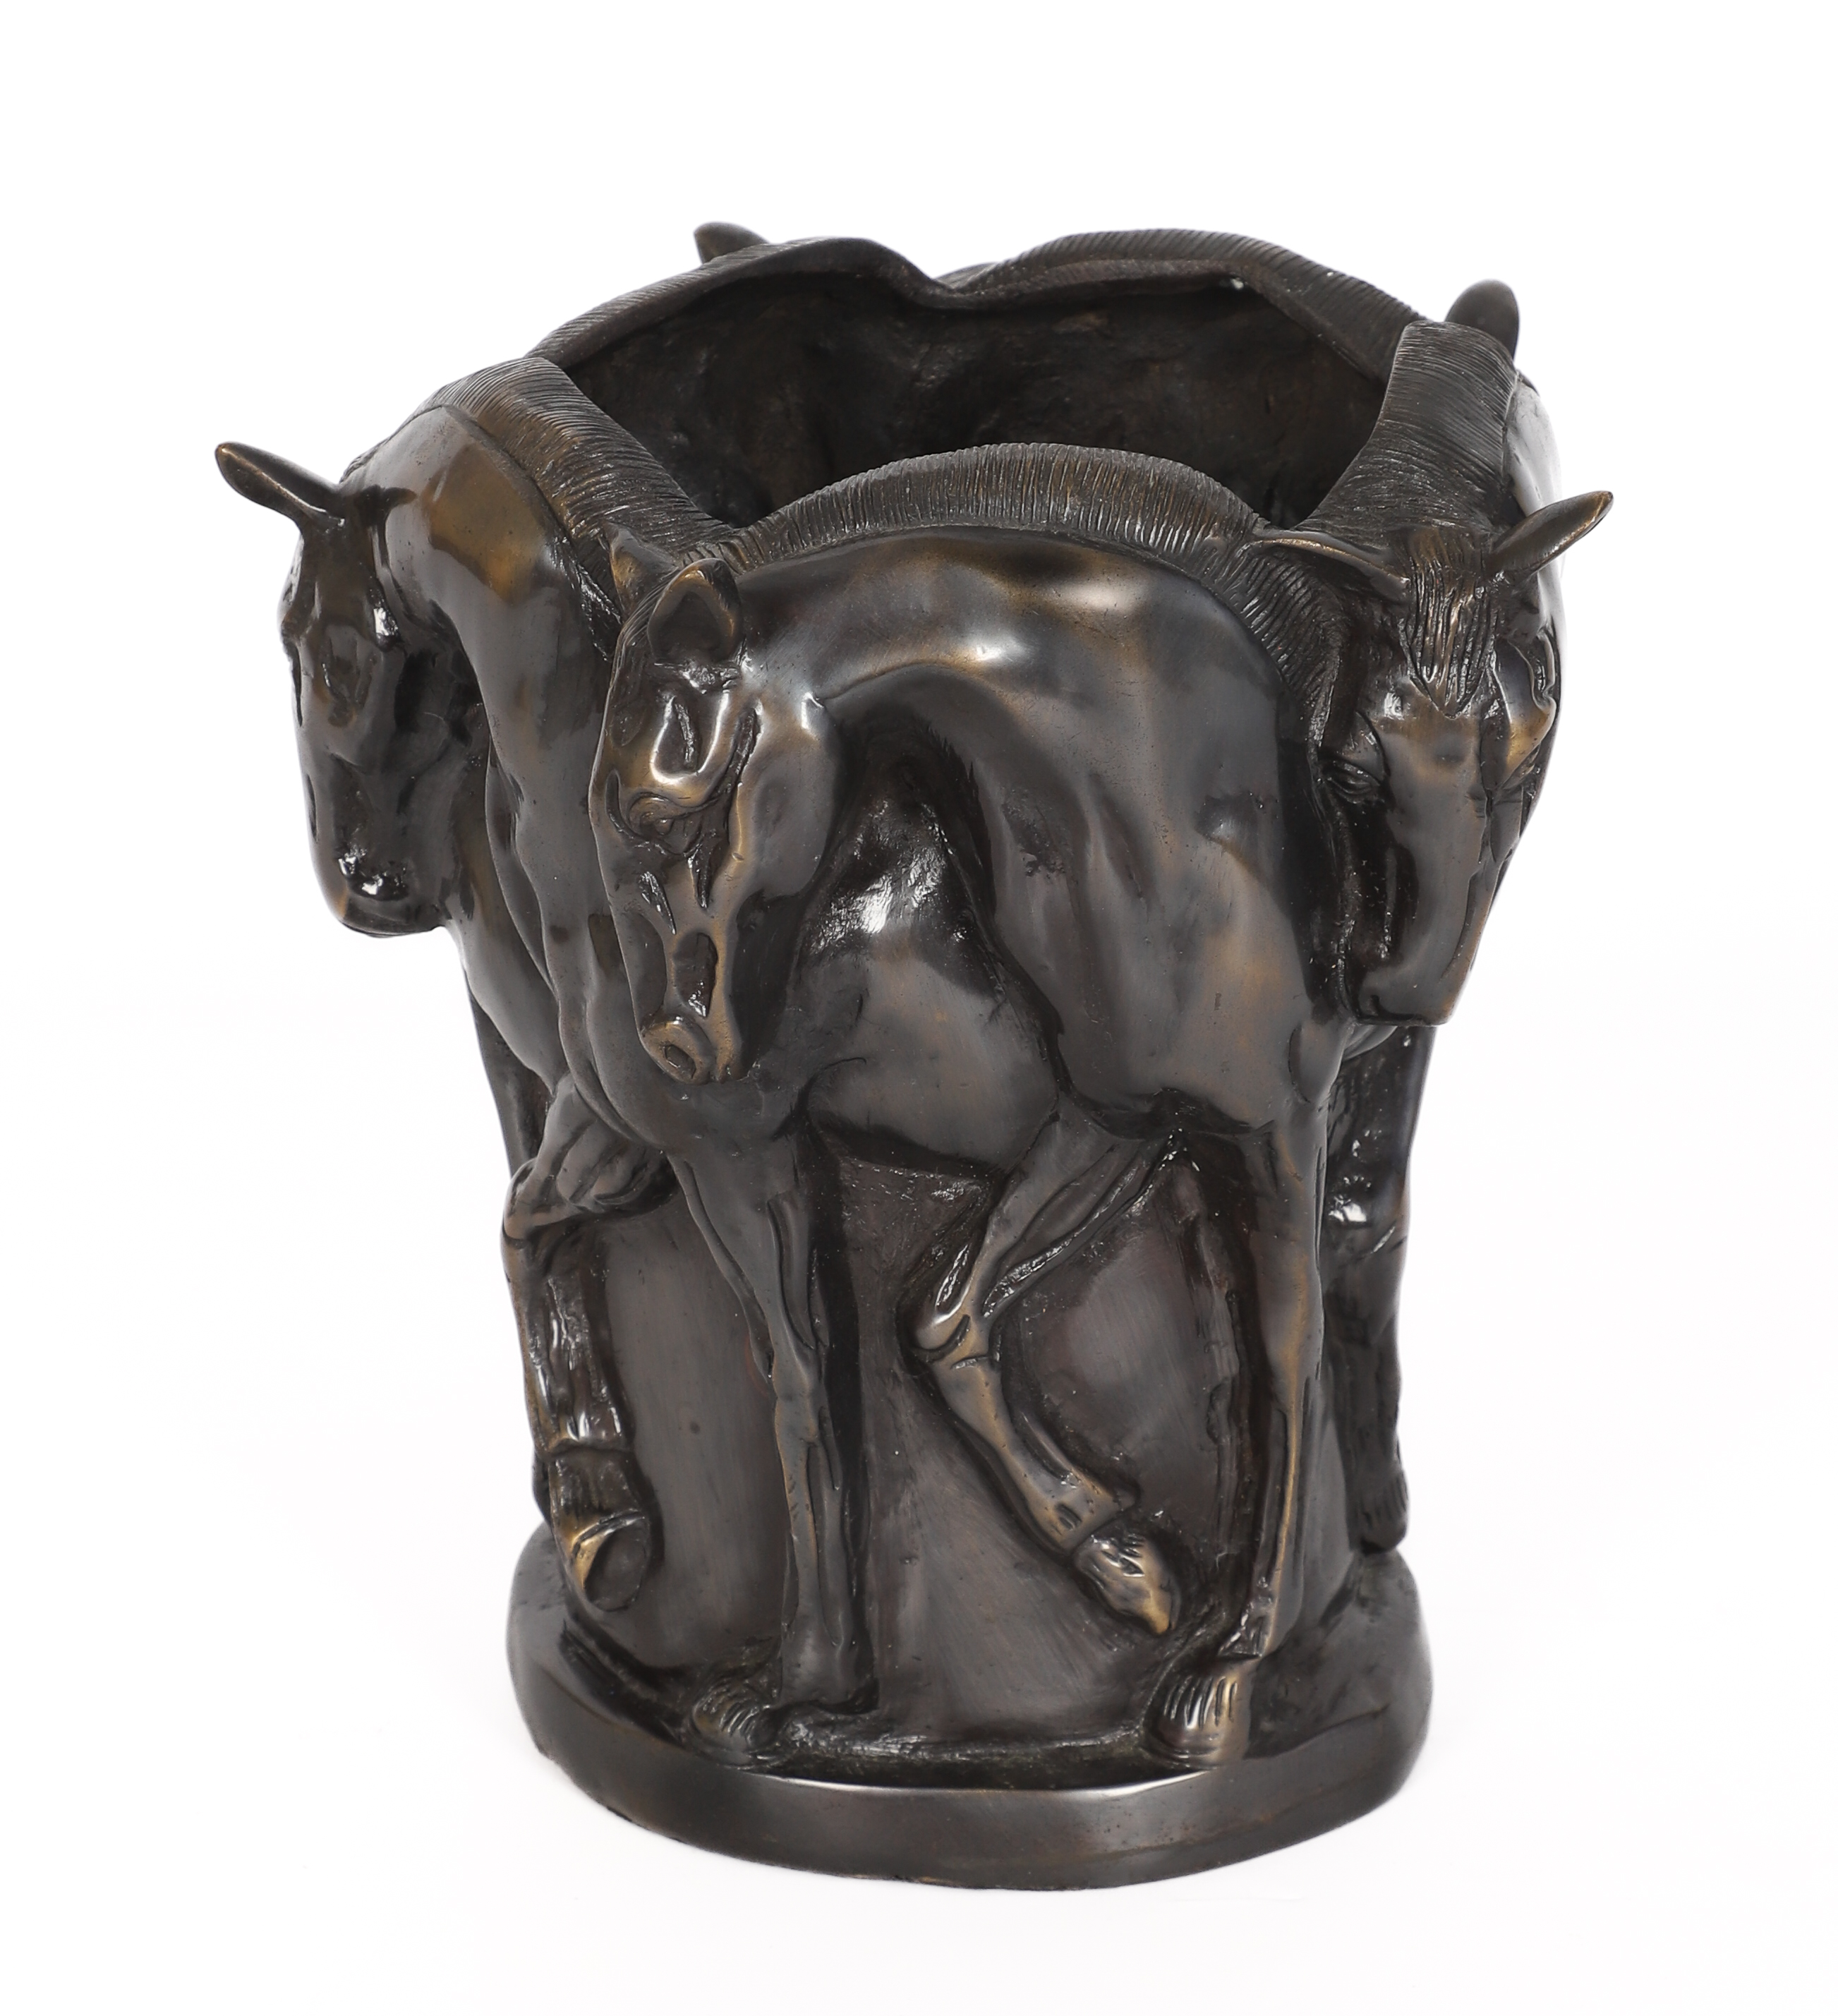 Art Deco style bronze molded vase 30910d